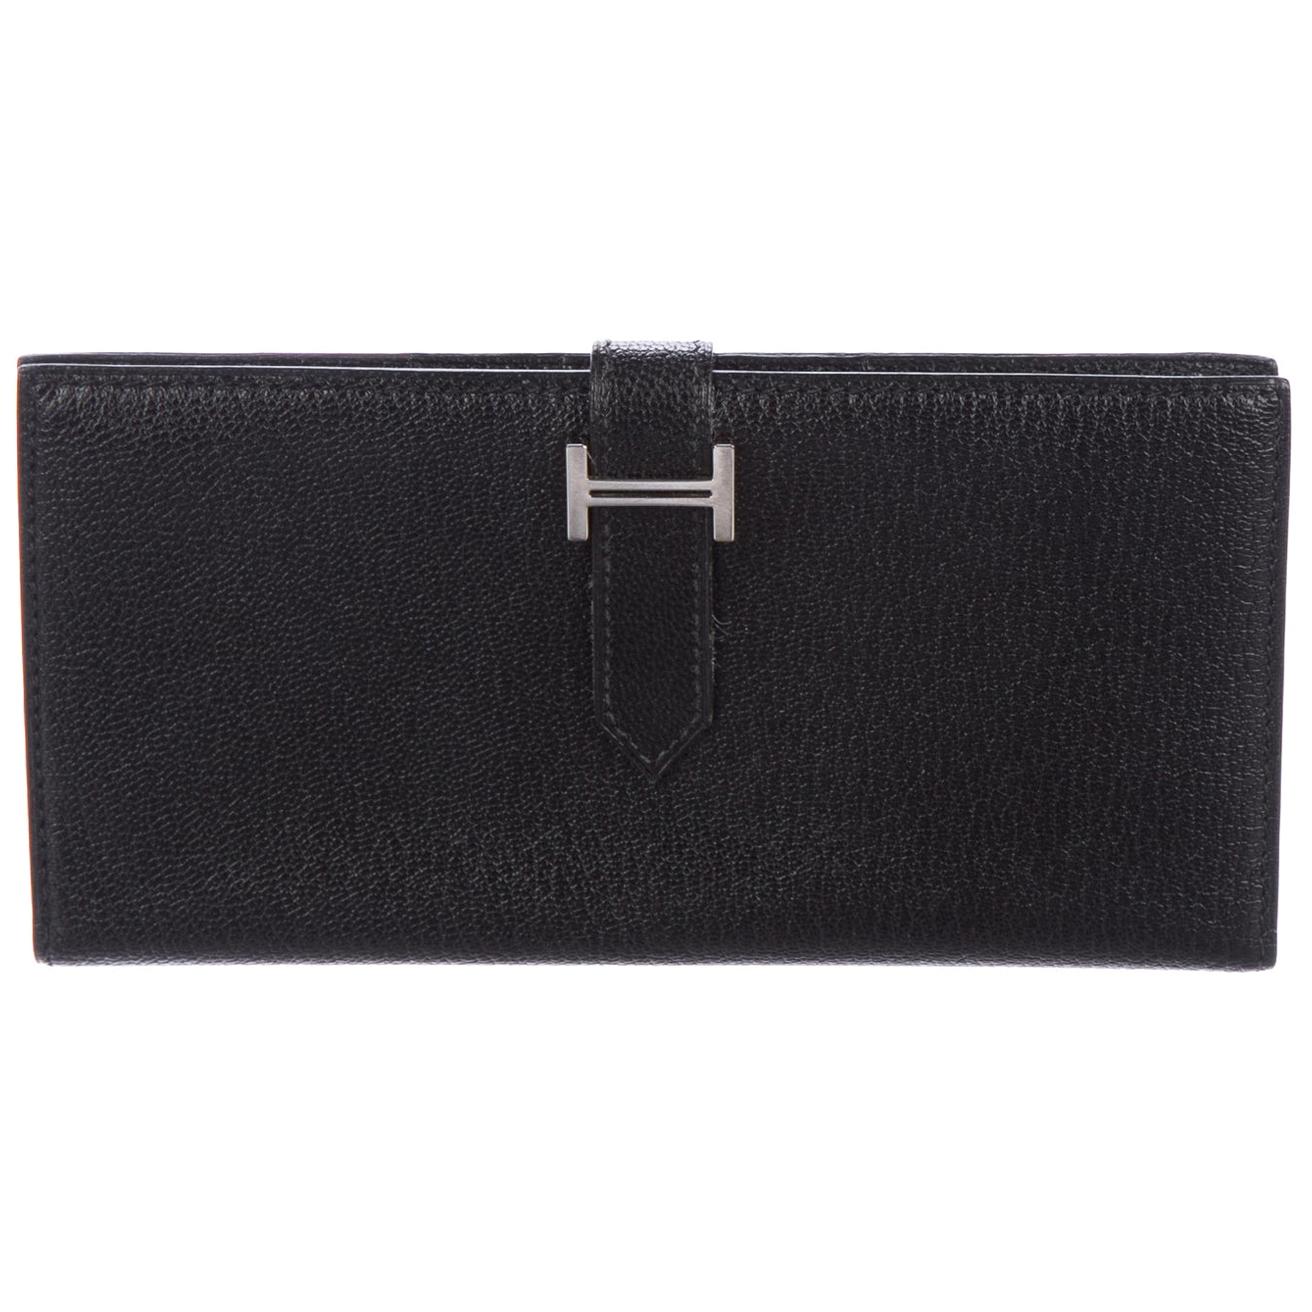 Hermes Black Leather Palladium 'H' Clutch Wallet in Box